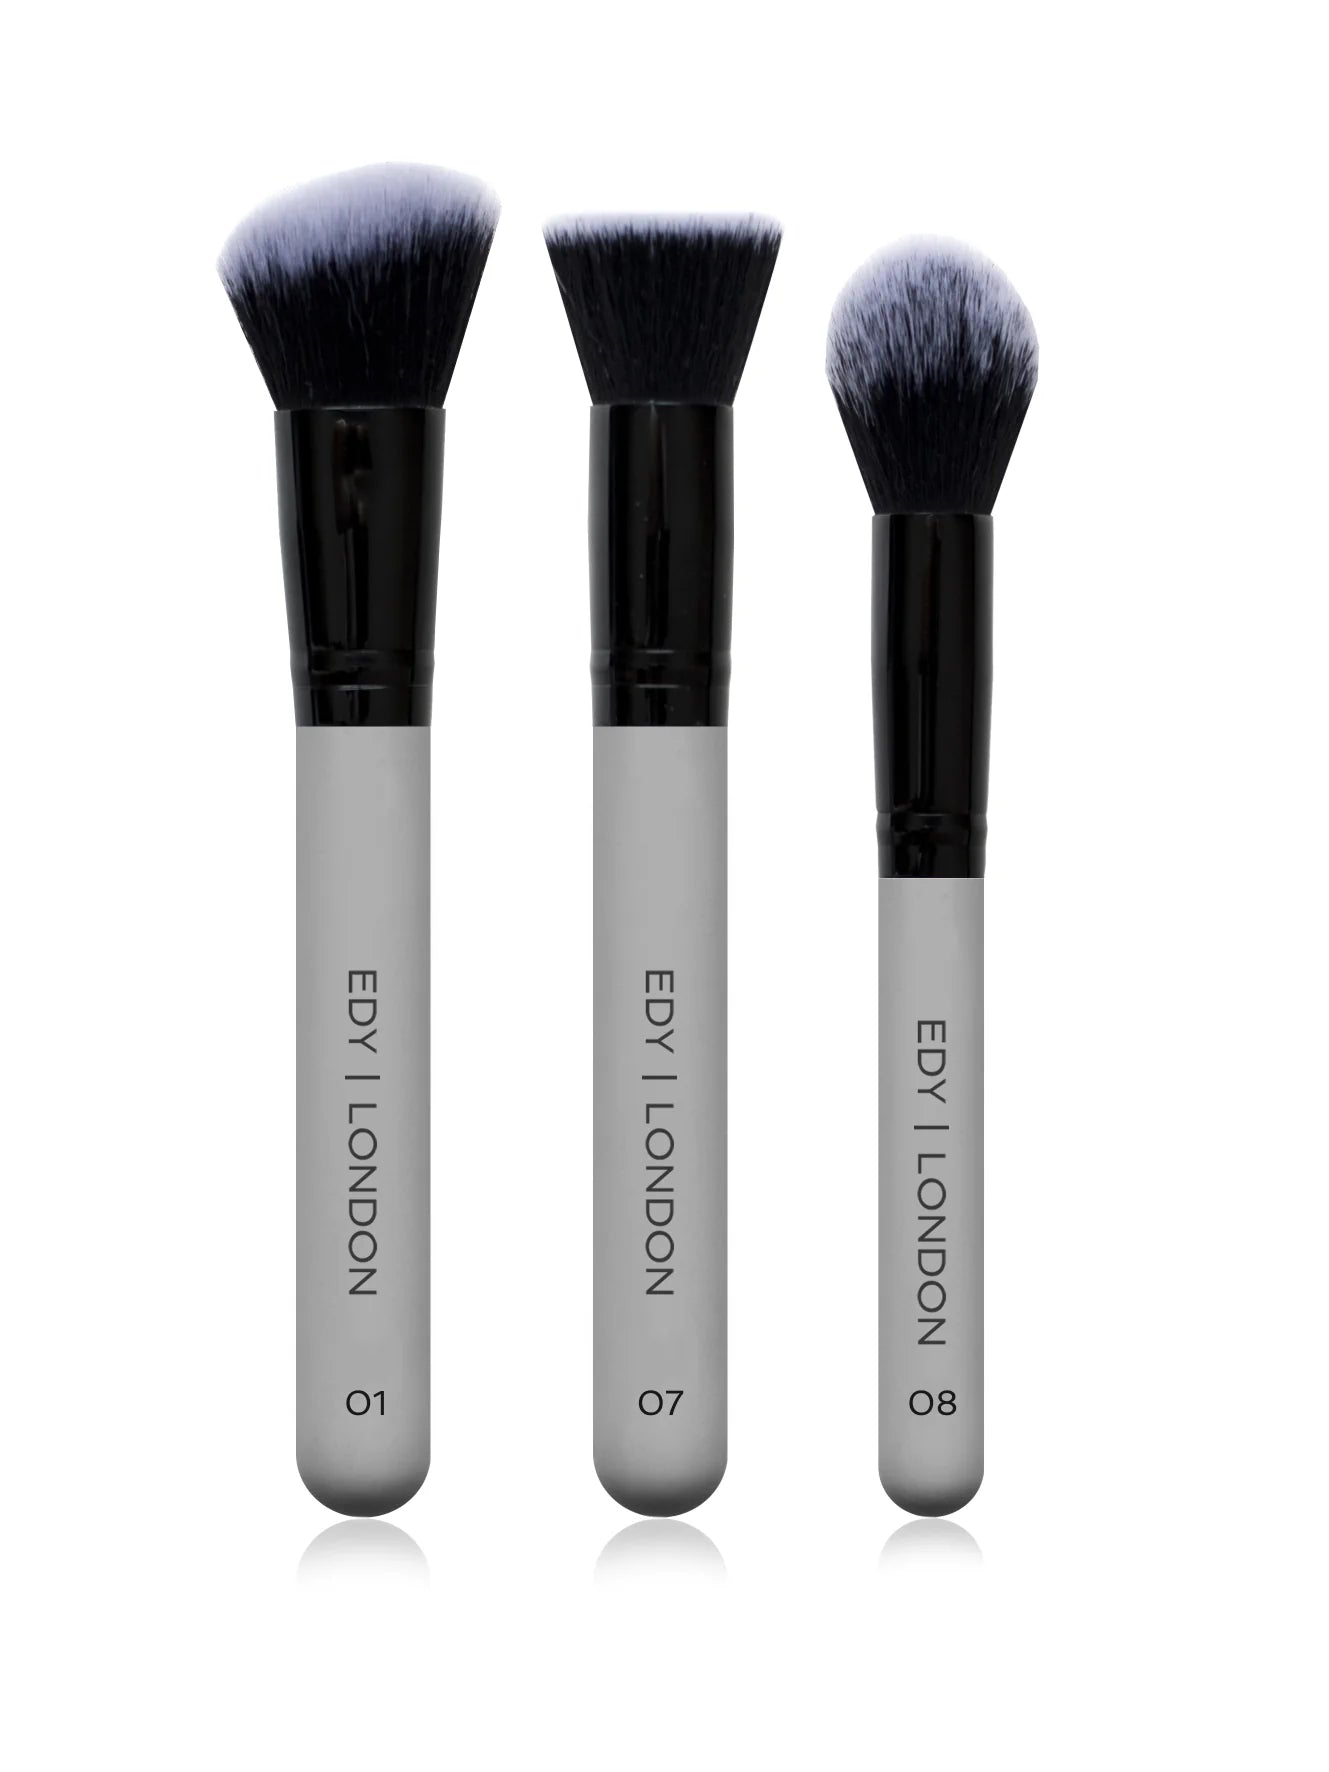 Dewy Skin Brush Set 508 Make-up Brush EDY LONDON Cool Grey   - EDY LONDON PRODUCTS UK - The Best Makeup Brushes - shop.edy.london